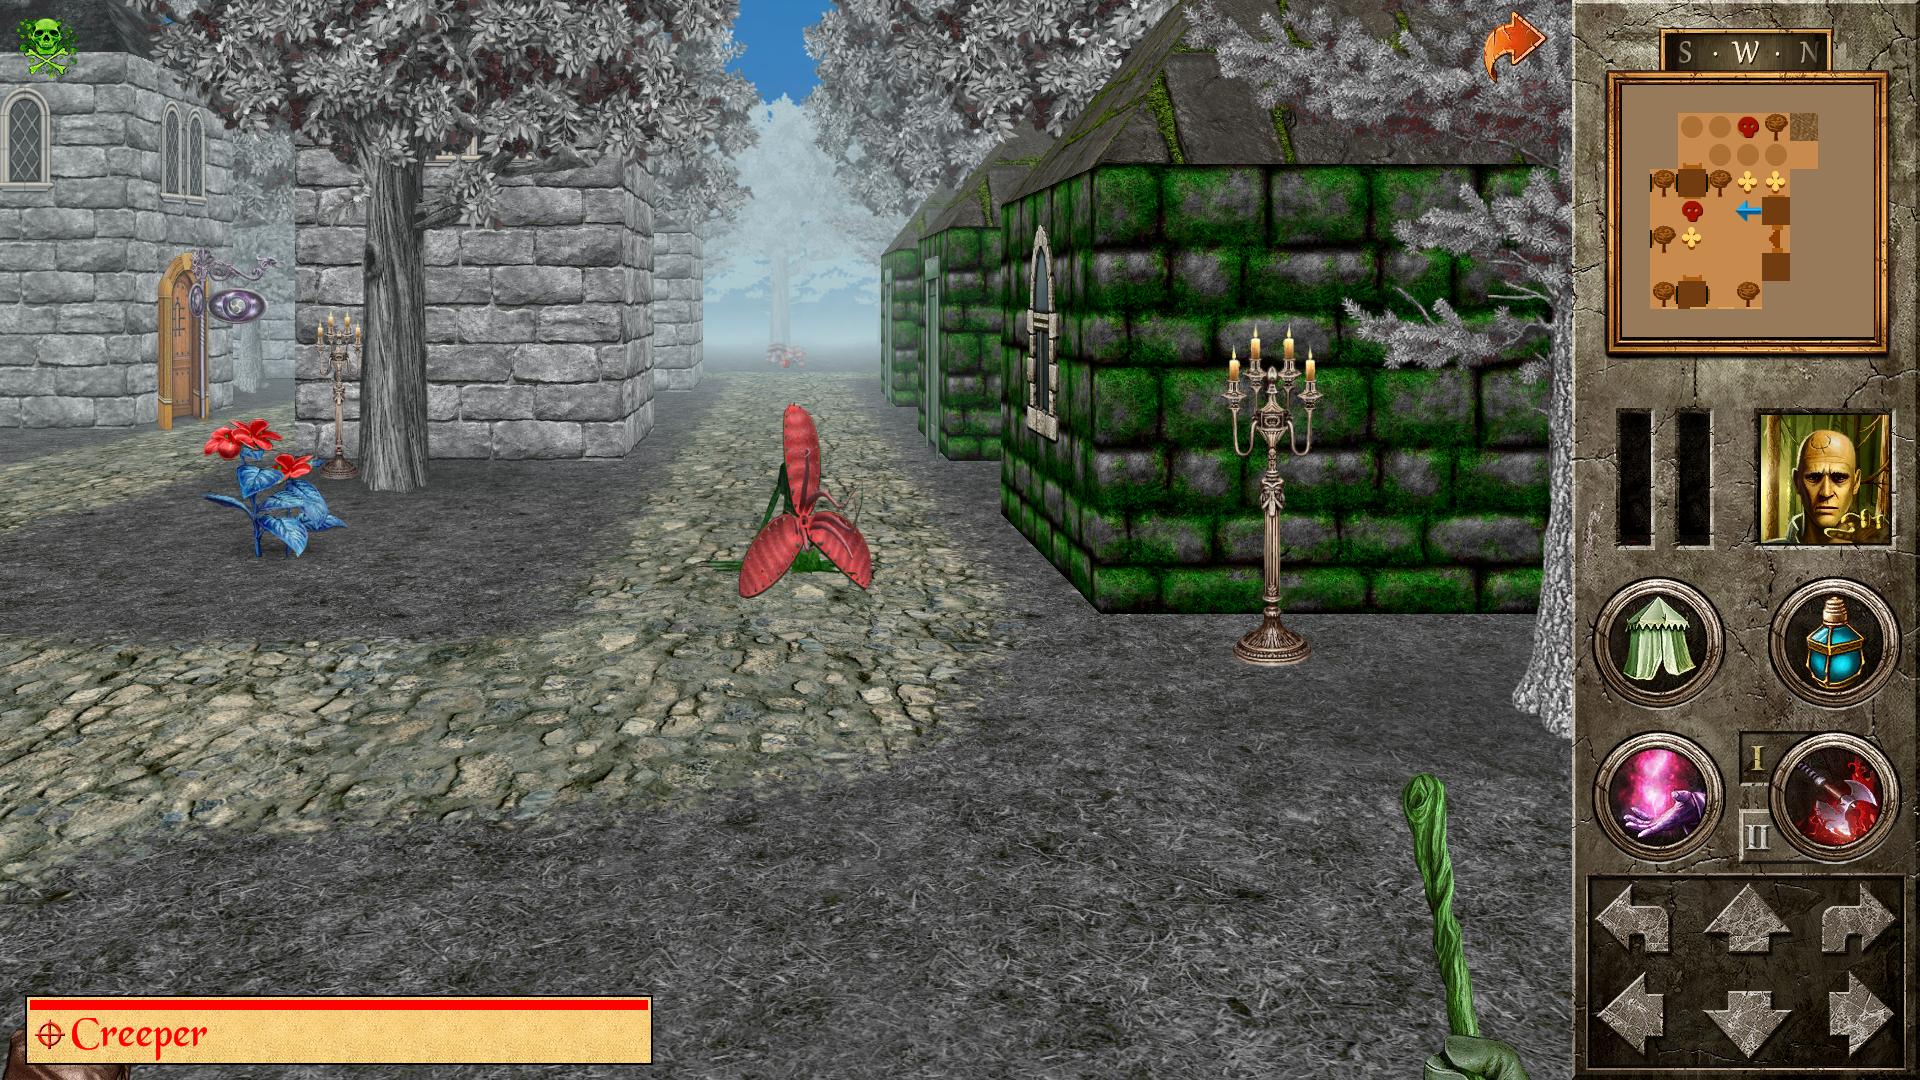 The Quest игра Redshift. HEROQUEST игра ПК. Игра Hero Quest на па. The Quest - Mithril Horde II на андроид. Игры похожие на playground